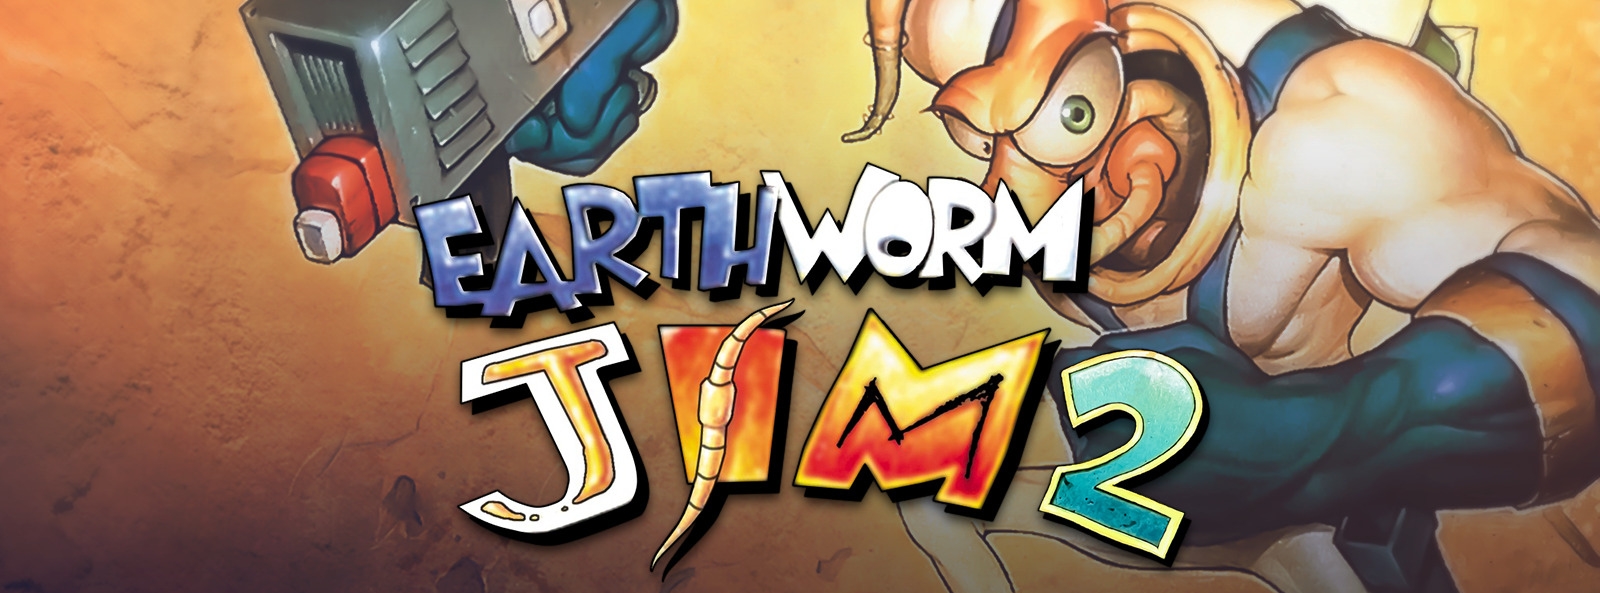 Banner Earthworm Jim Menace 2 the Galaxy